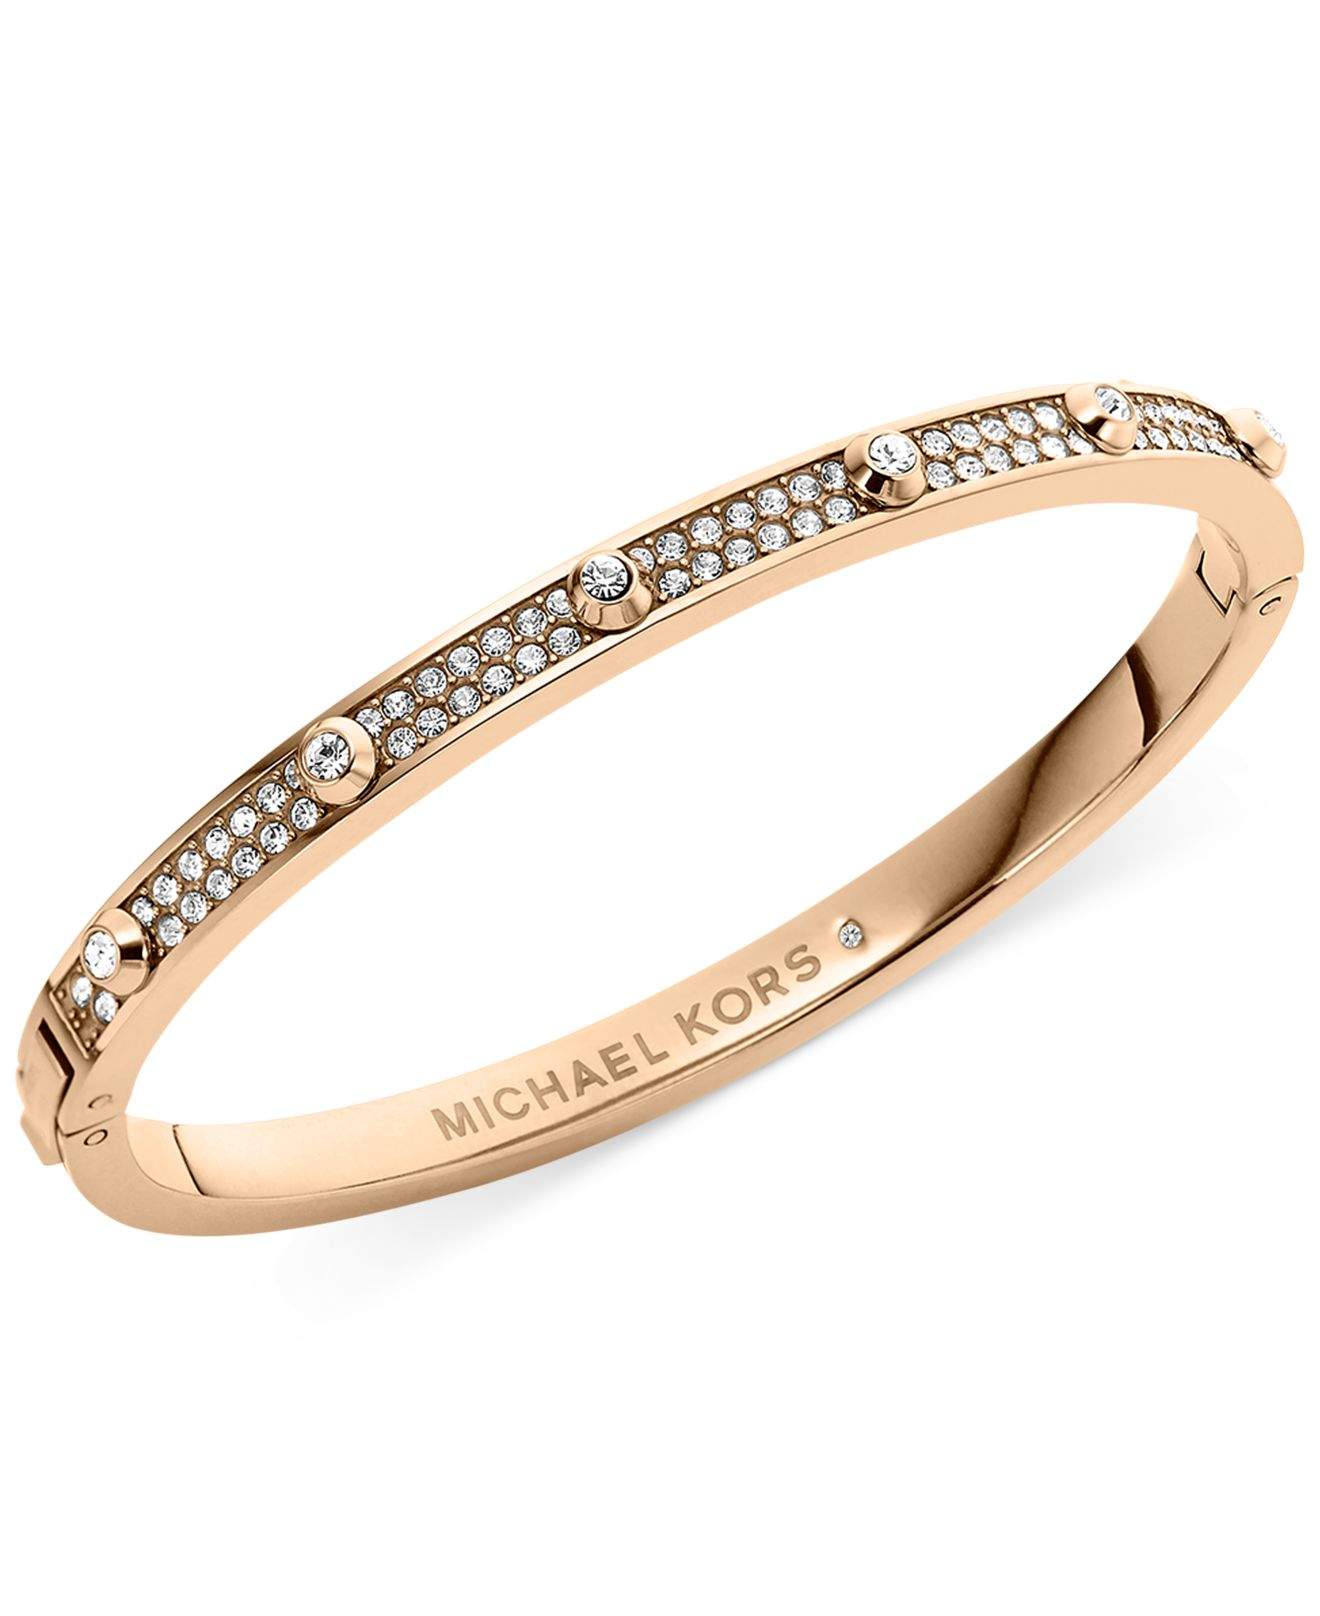 Michael Kors Rose Gold-Tone Crystal Hinge Bangle Bracelet in Metallic | Lyst